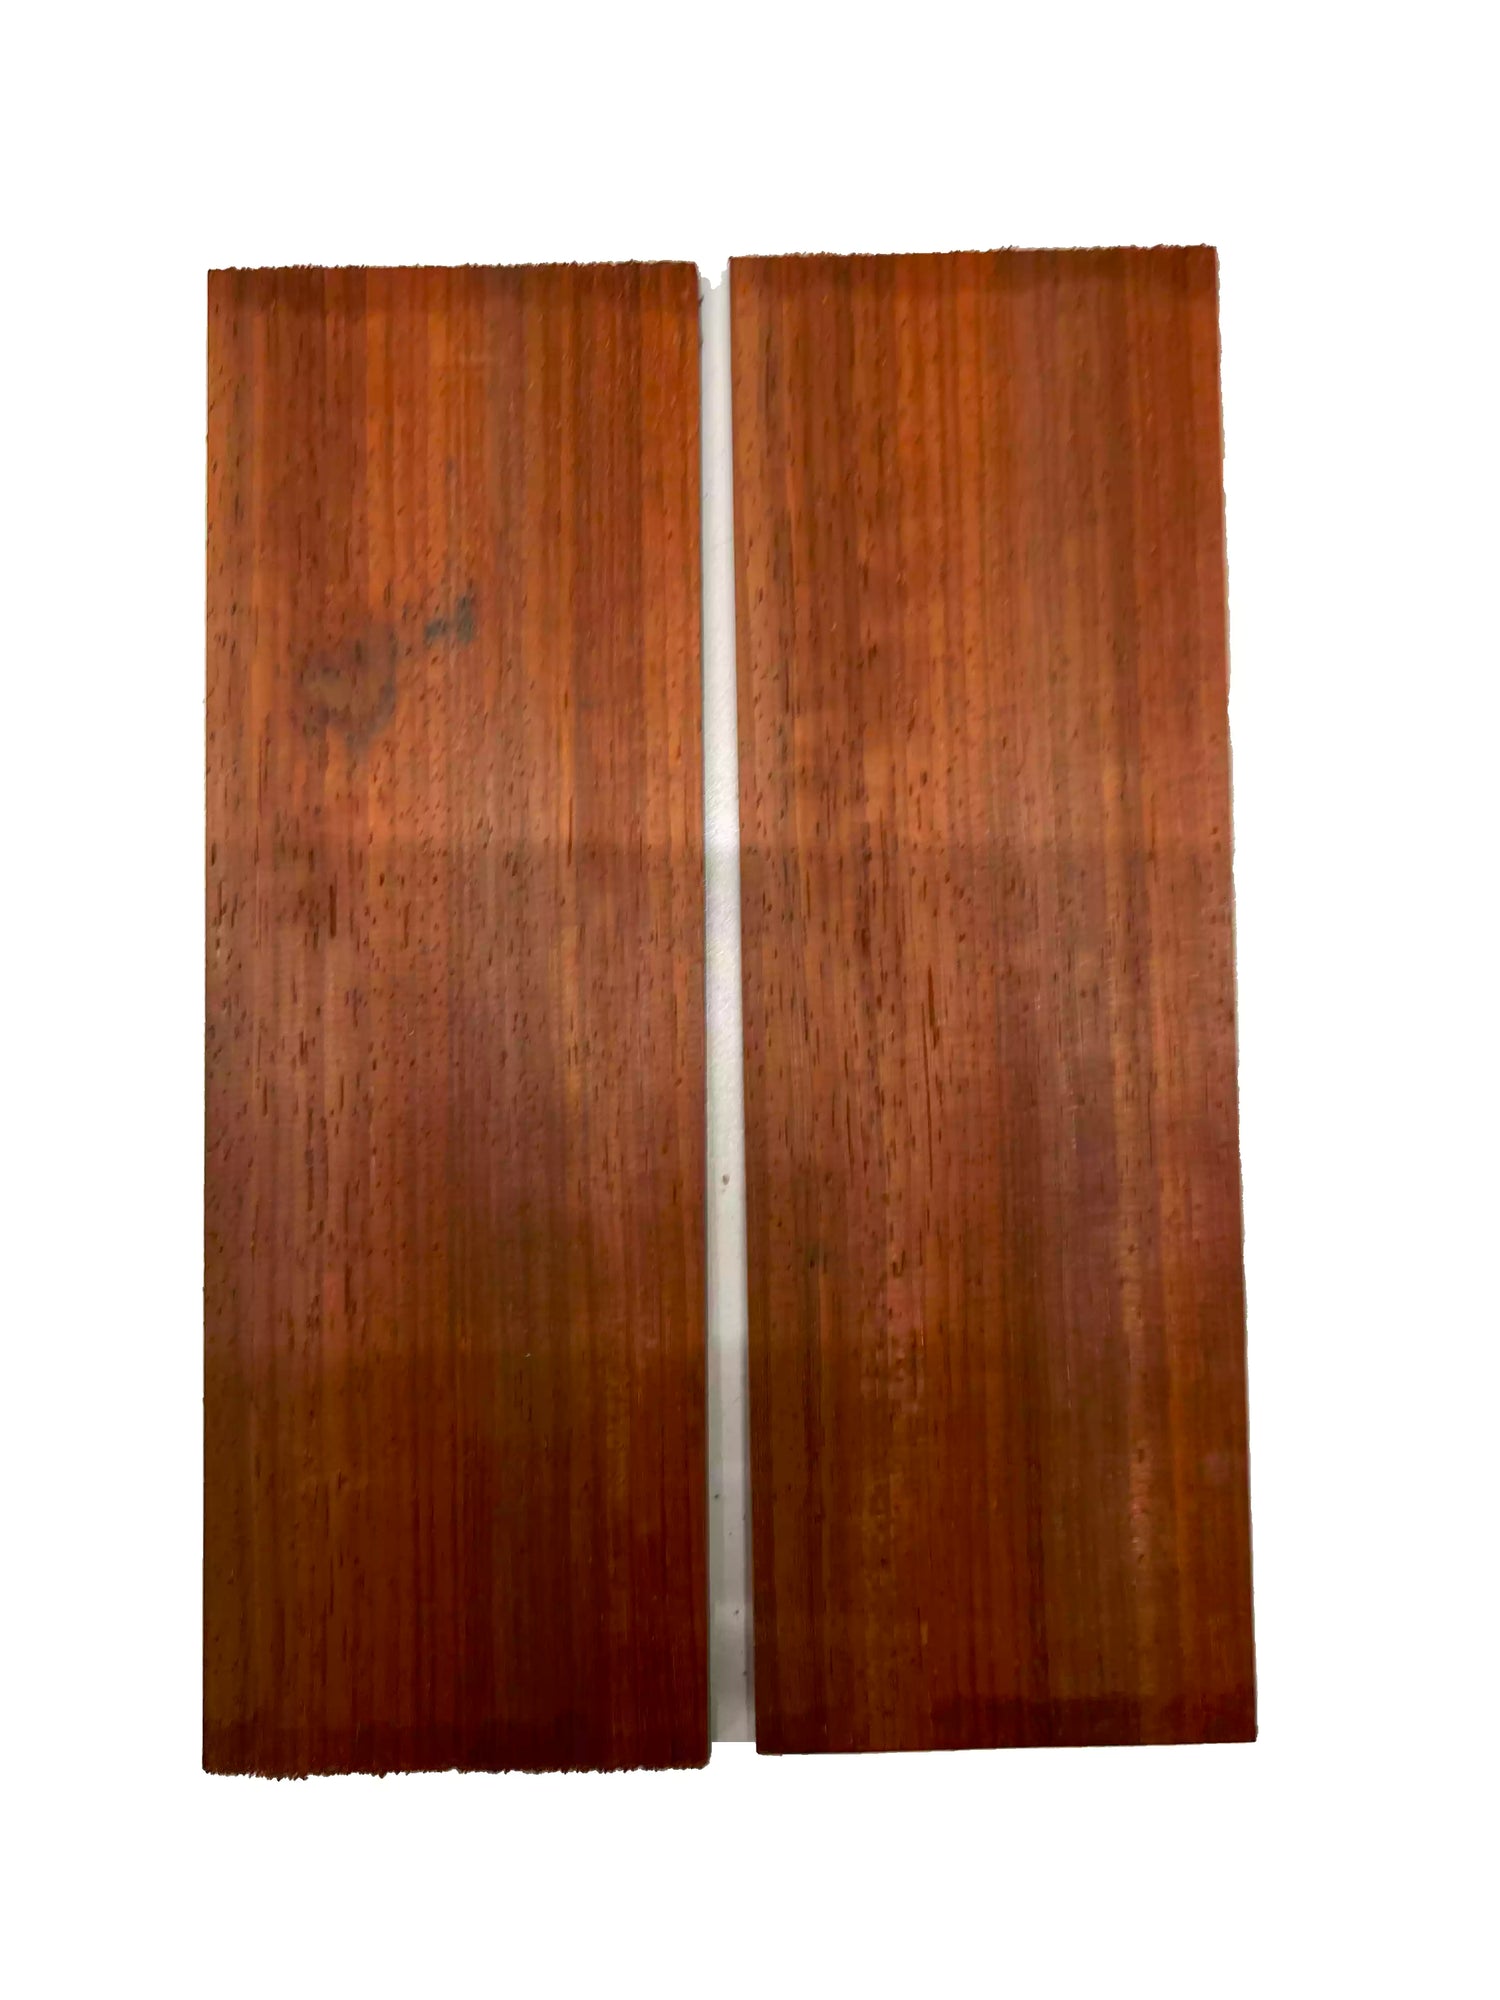 Pack of 2, Padauk Thin Stock Three Dimensional Lumber Board 12&quot; x 4&quot; x 1/4&quot; 